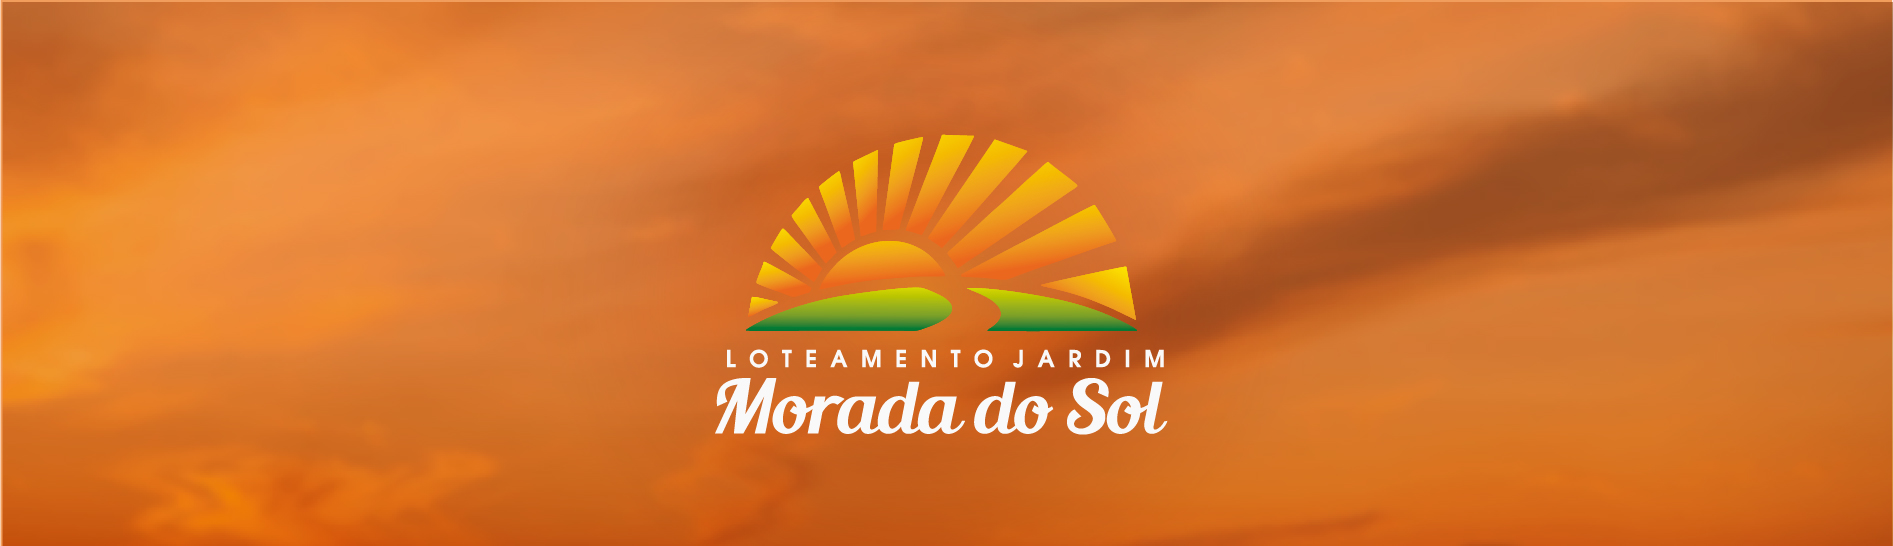 Banner - Site - Morada do Sol -02